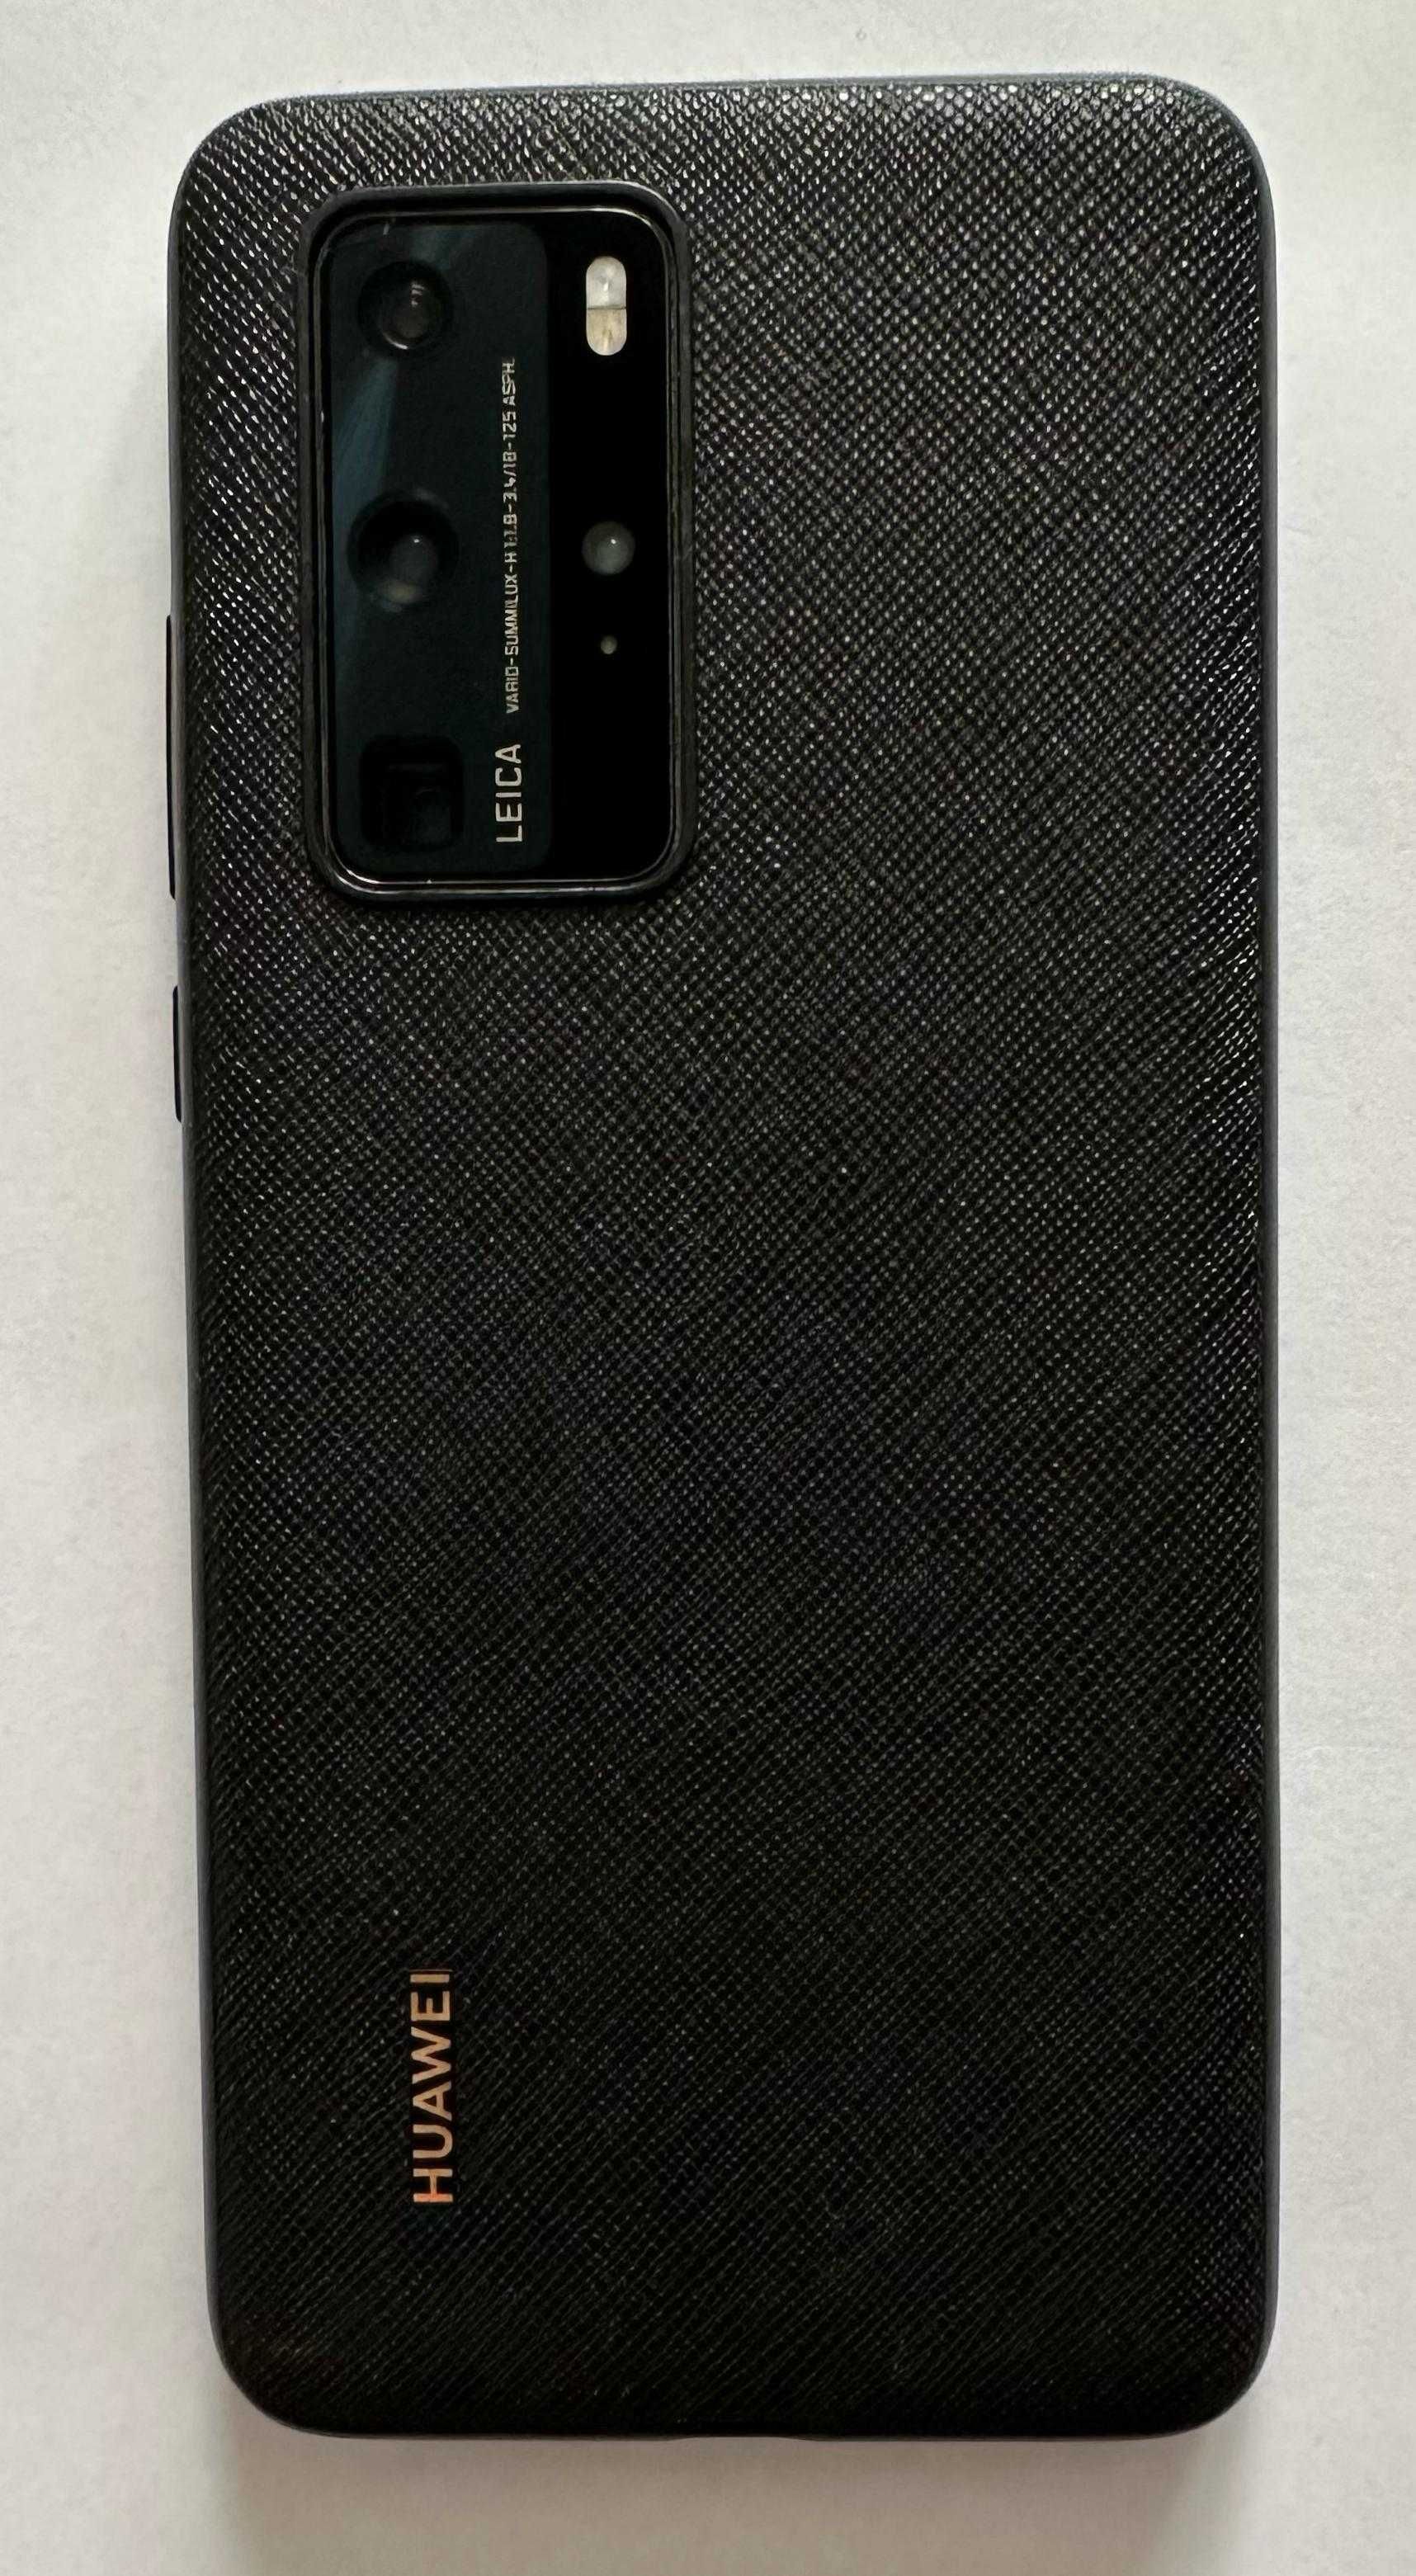 Vand Huawei P40 Pro, 5G, 256GB, dual SIM, husa originala lux